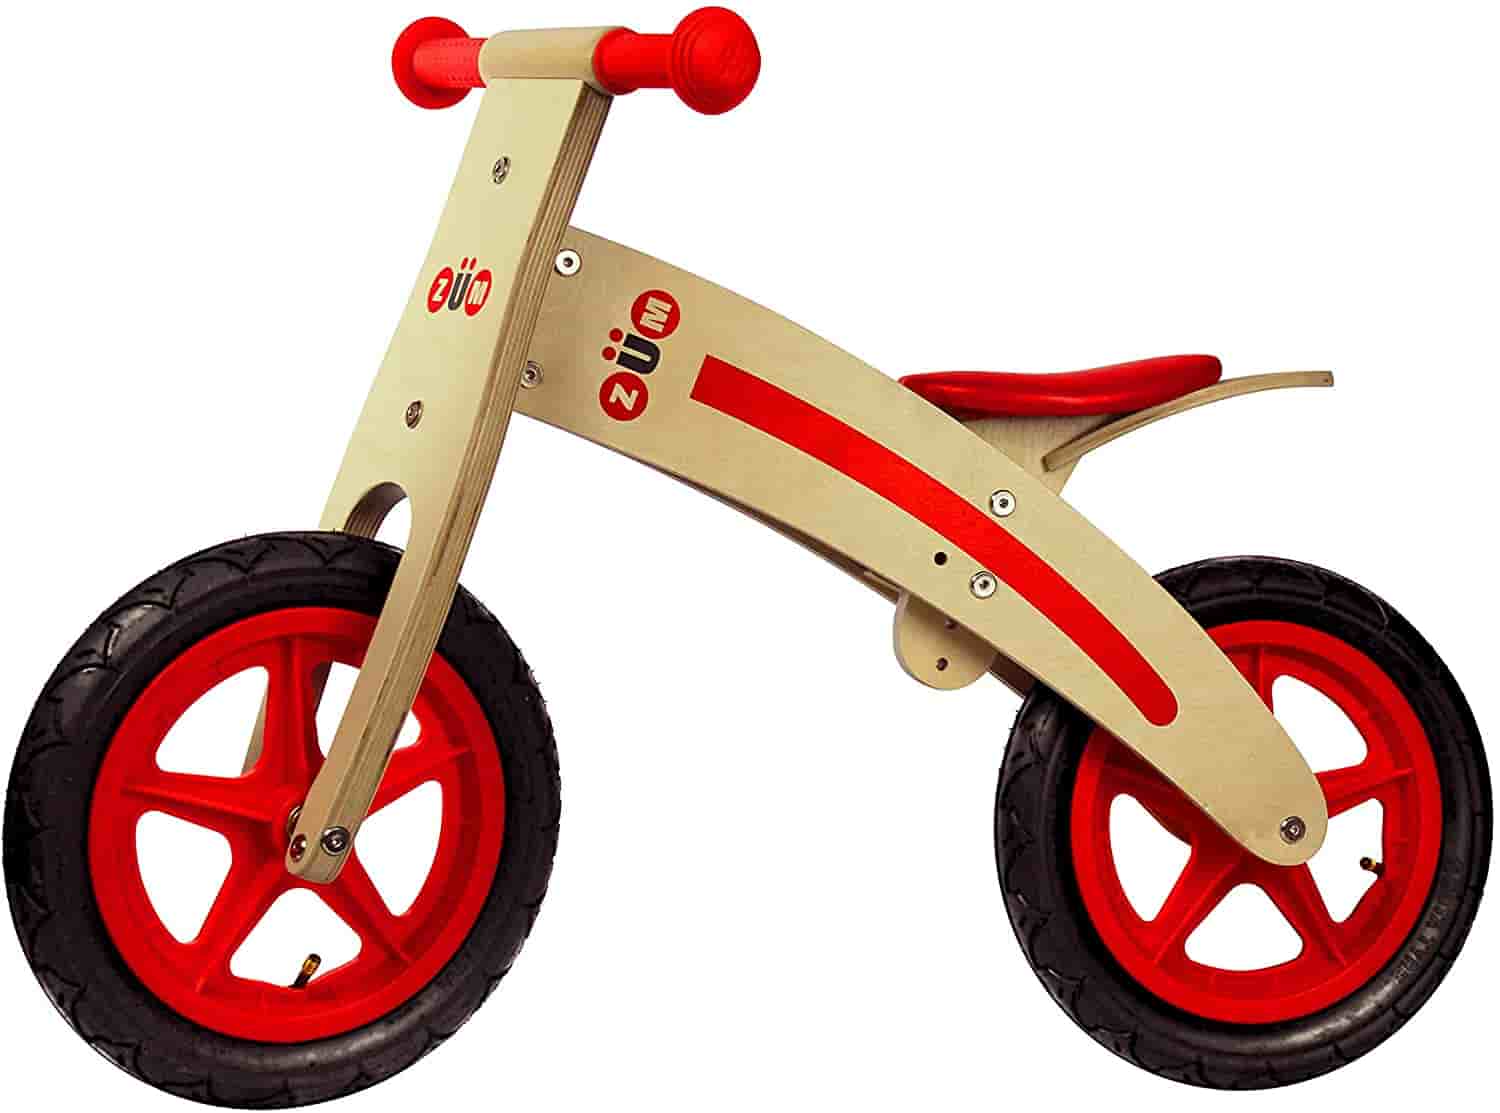 Zum CX Wooden Kids Balance Bike